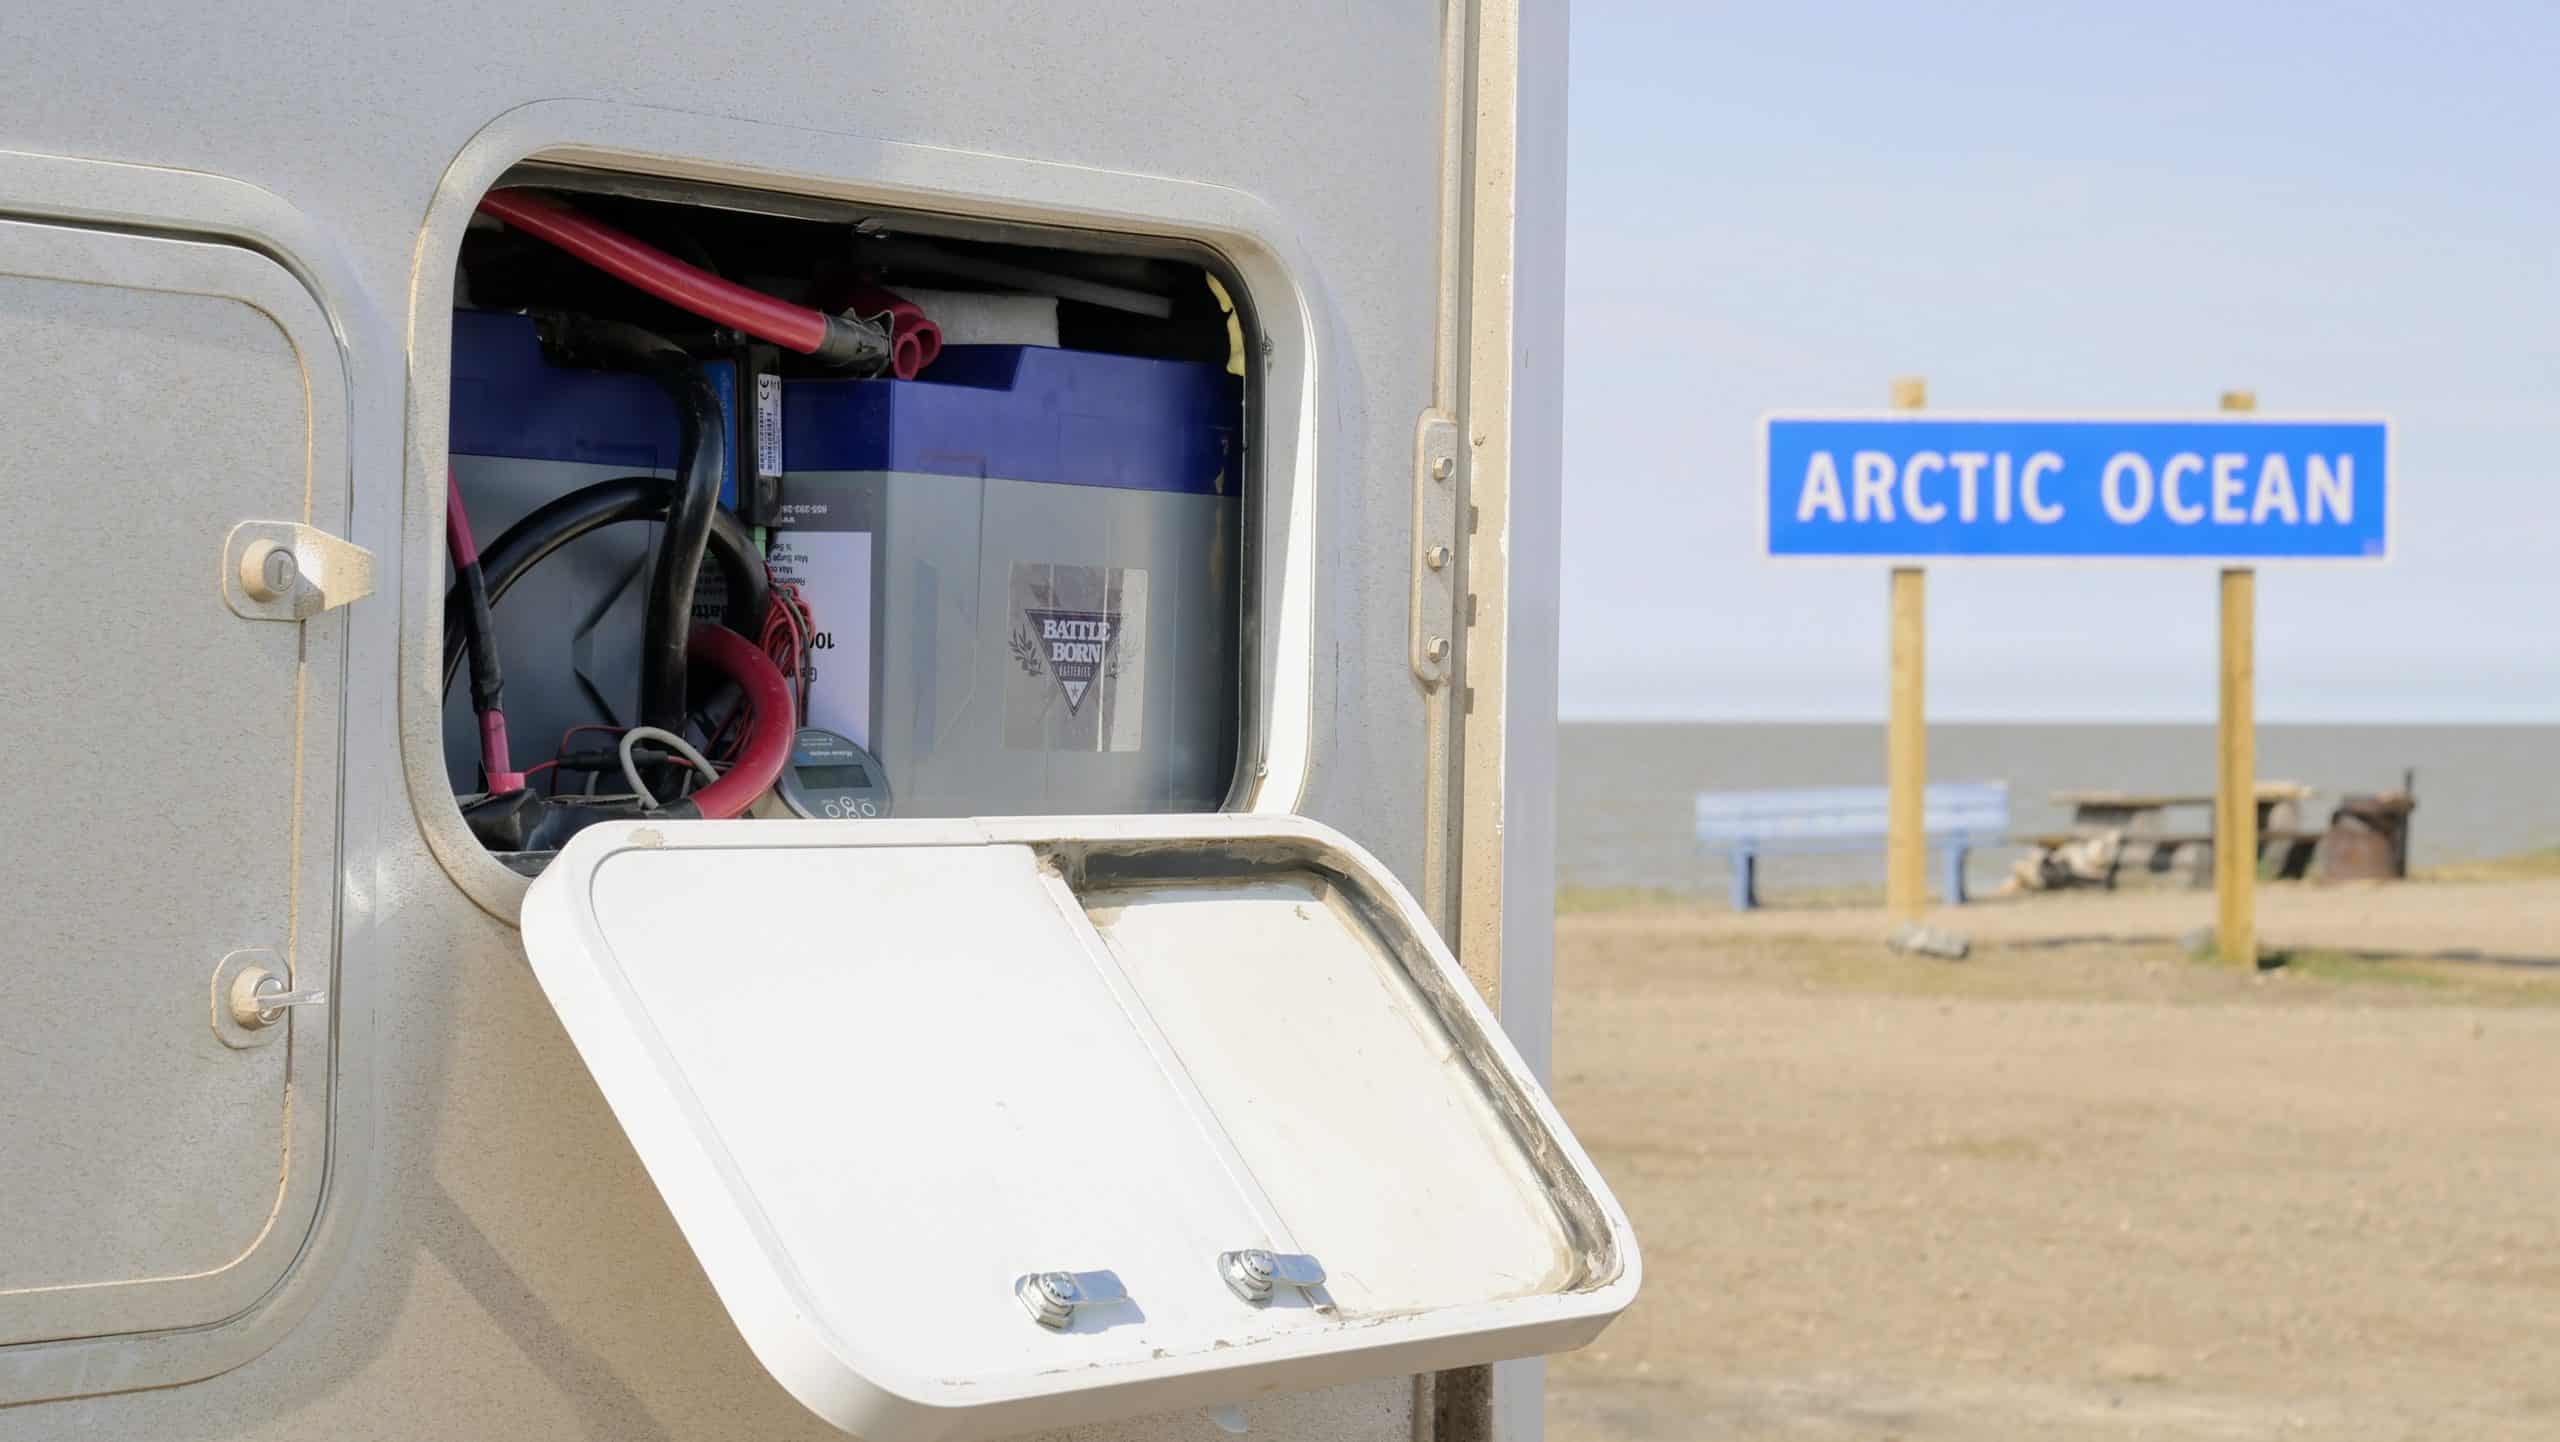 Battle Born Batteries in an RV compartment near the Arctic Ocean